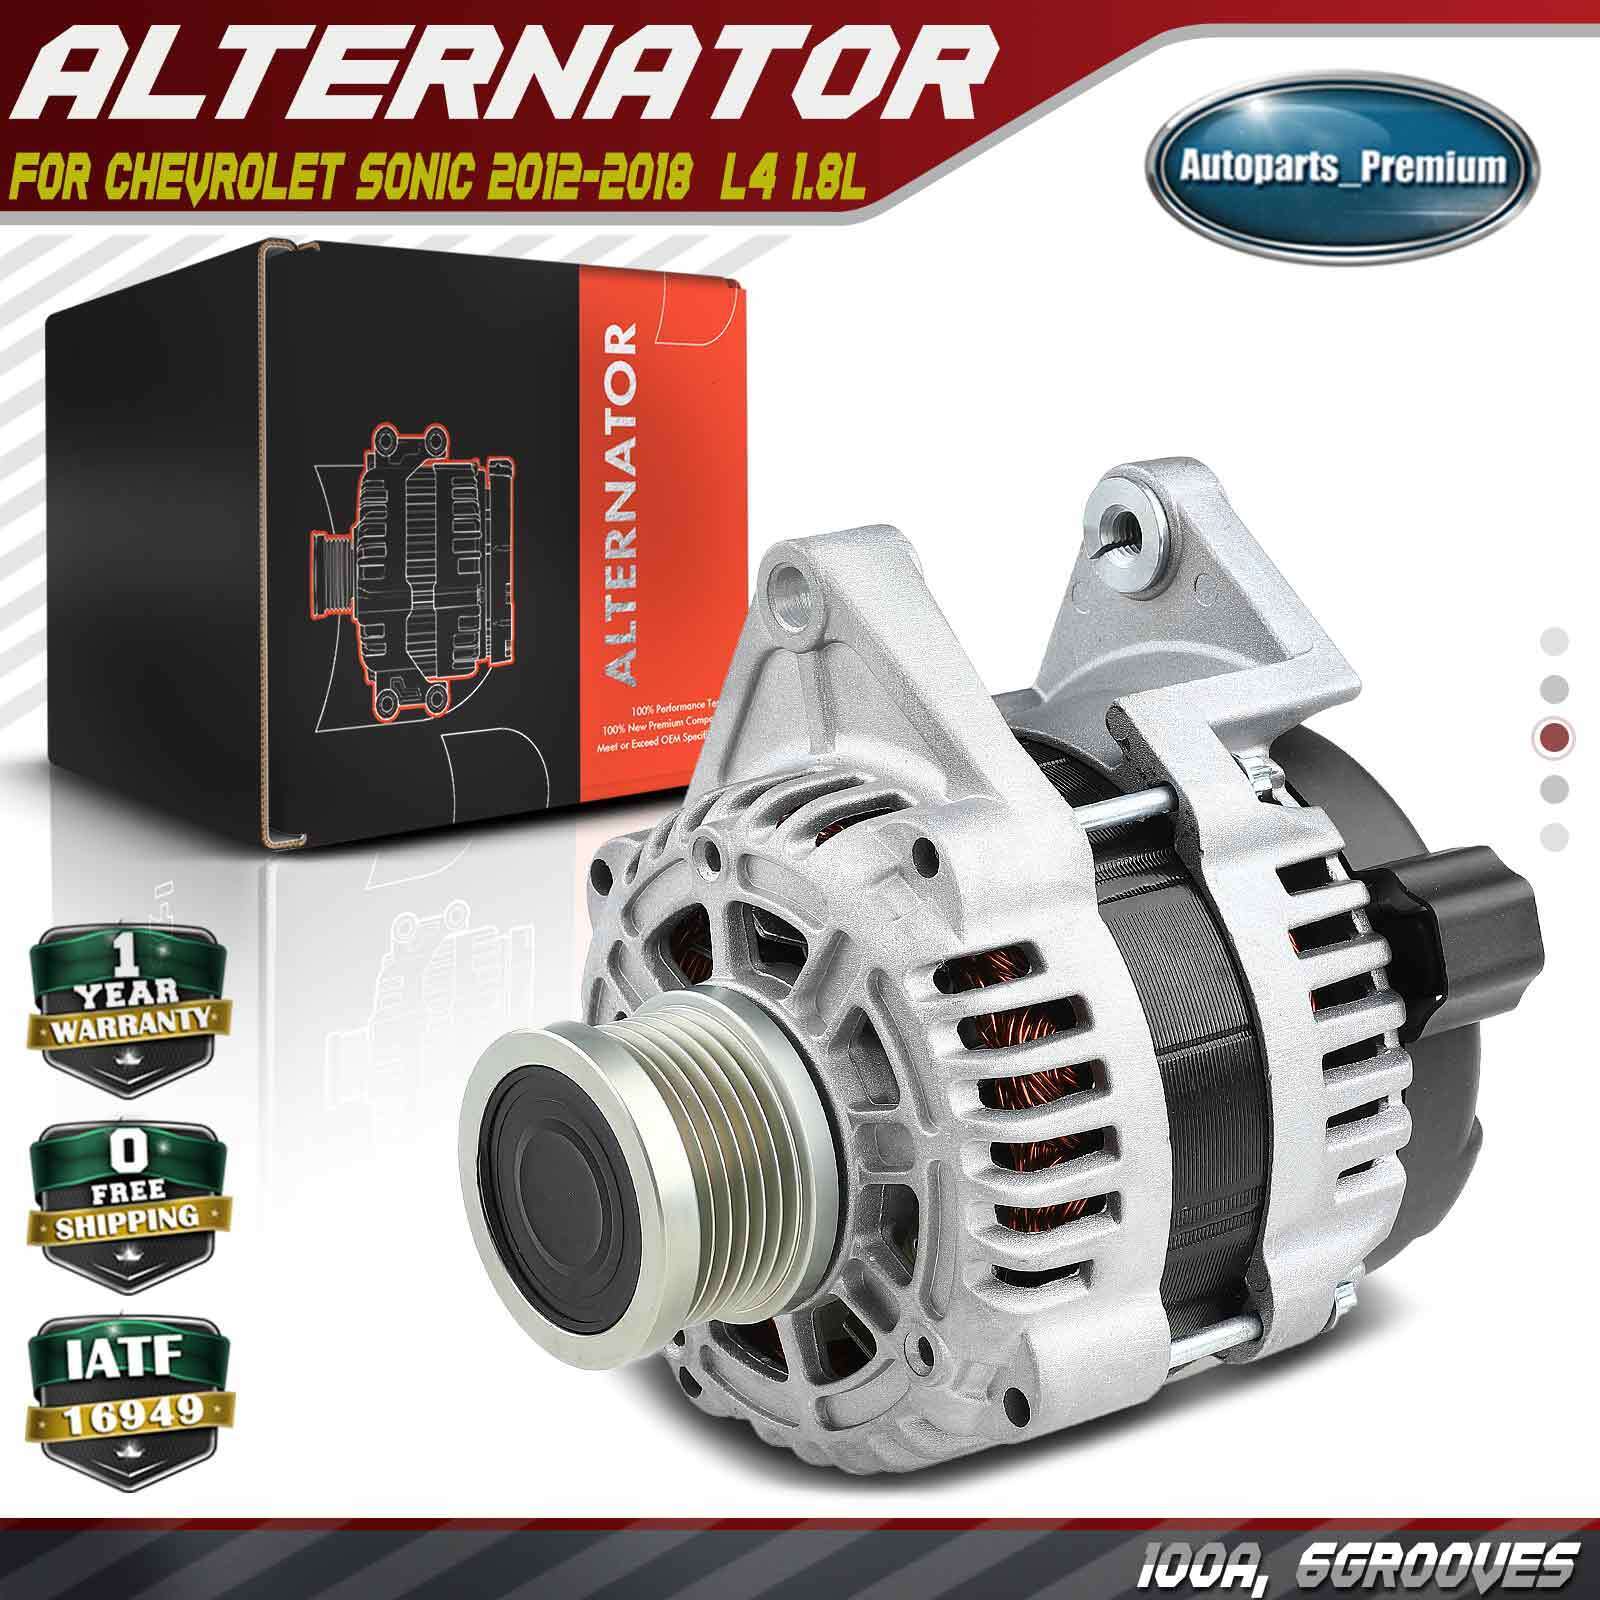 Alternator for Chevrolet Sonic 2012-2018 L4 1.8L 100A 12V CW 6G Clutch Pulley